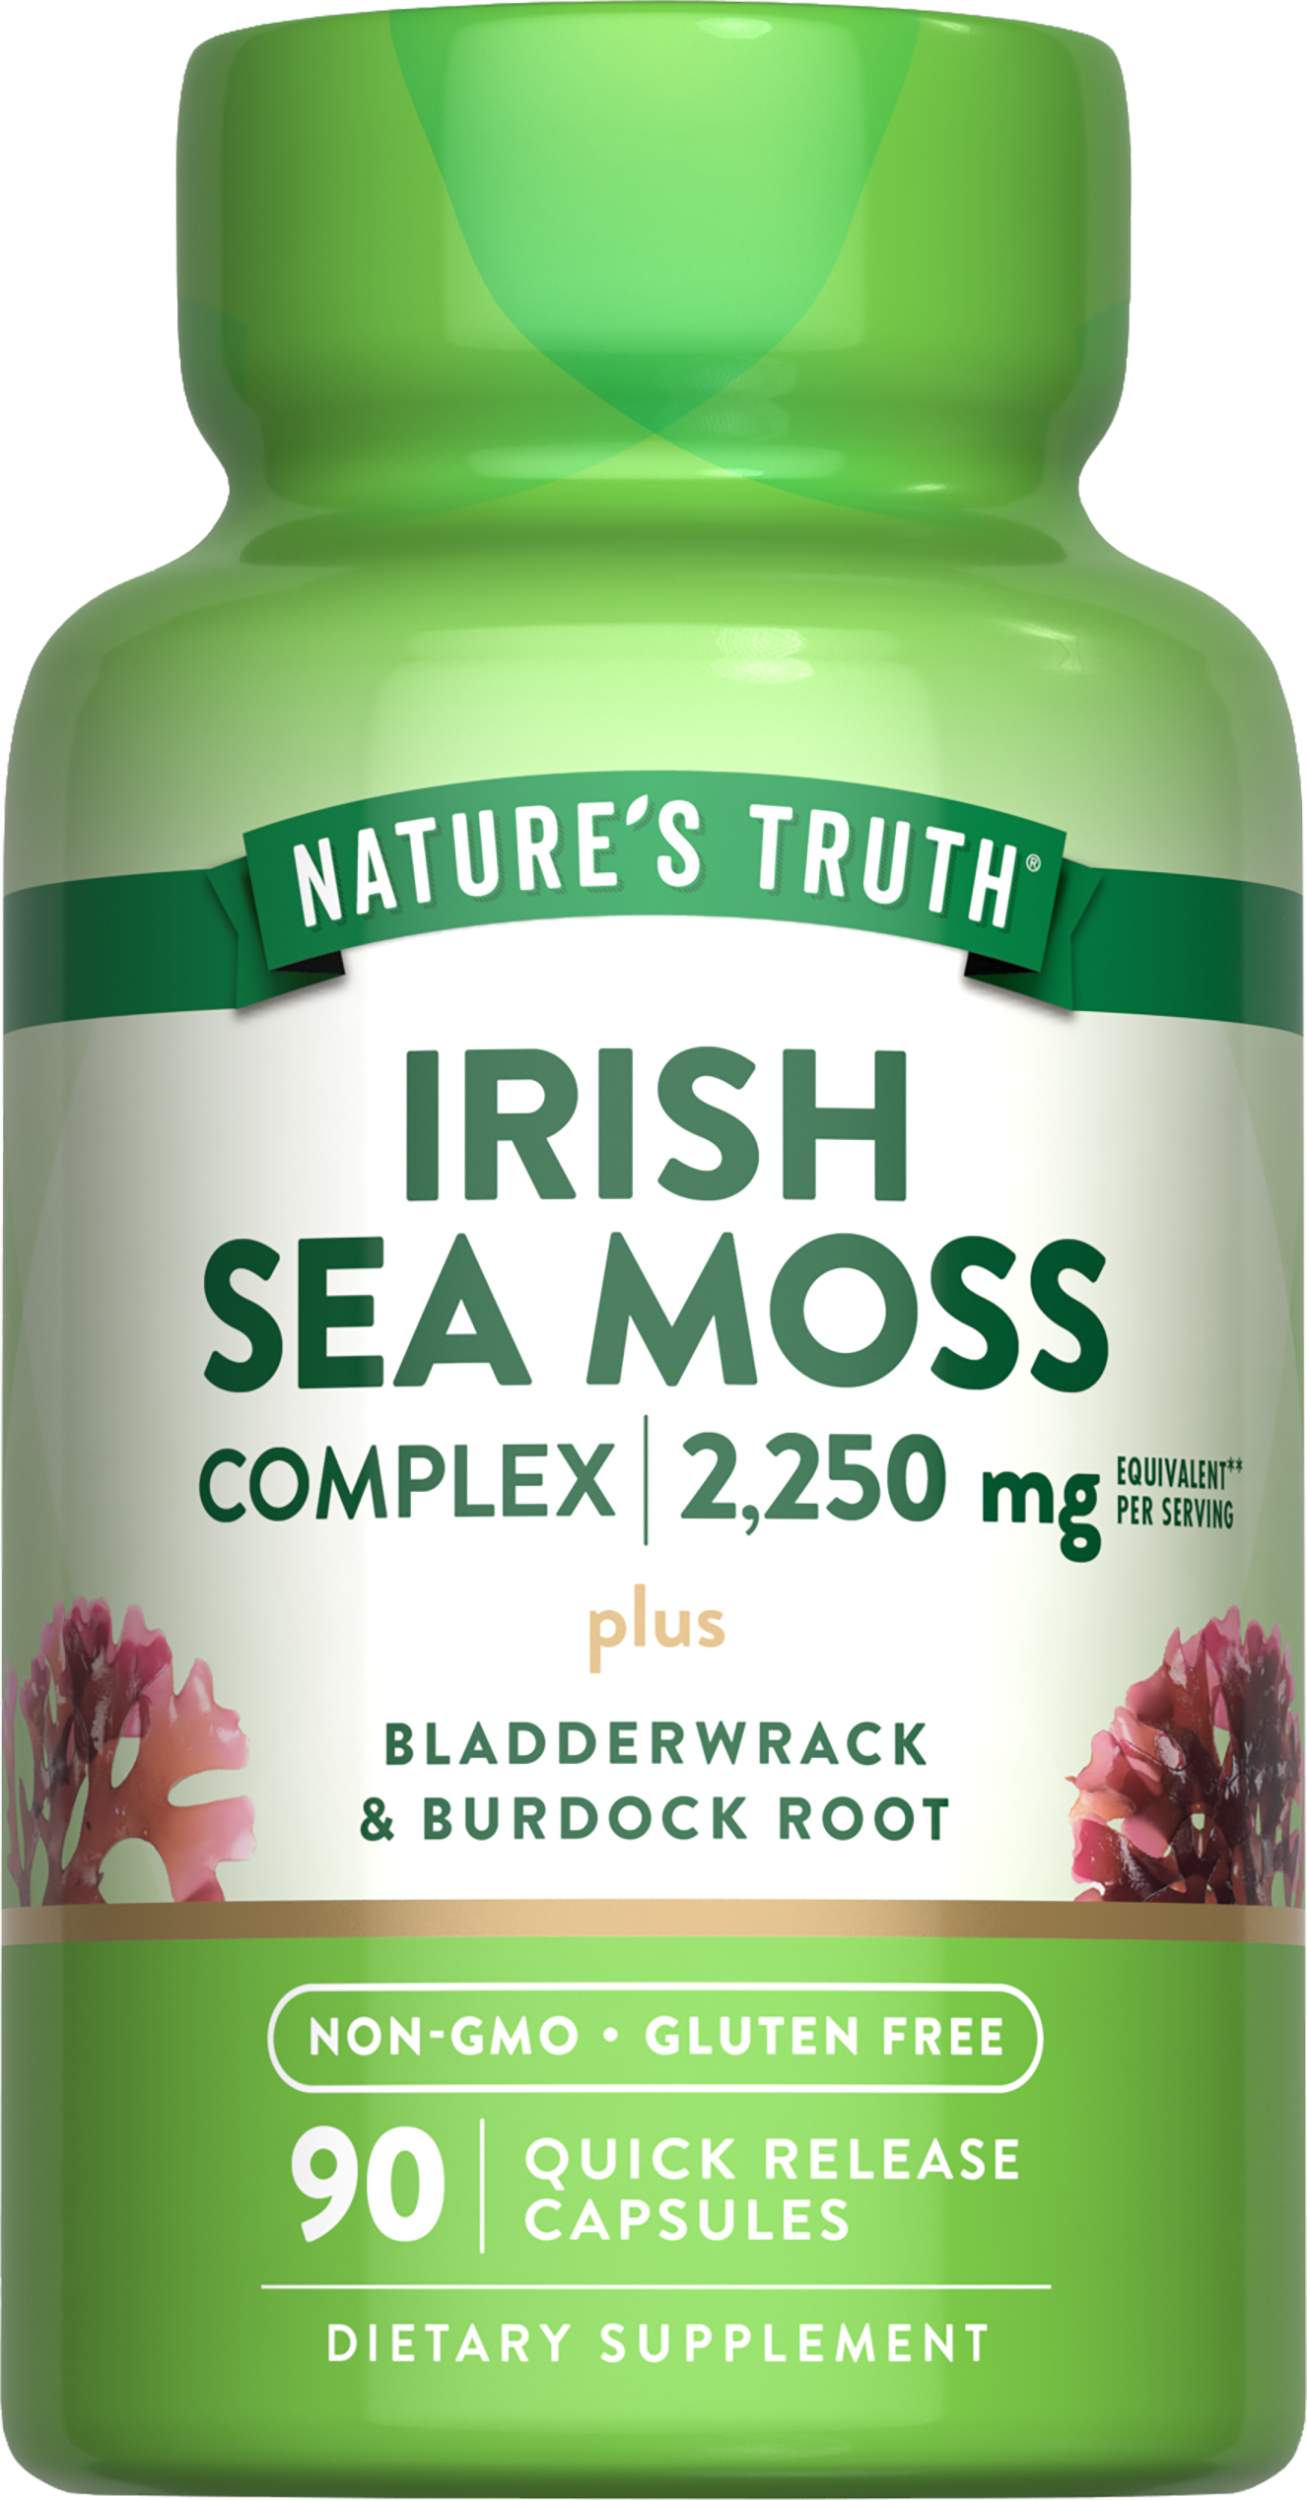 Irish Sea Moss Complex with Bladderwrack, Burdock Root